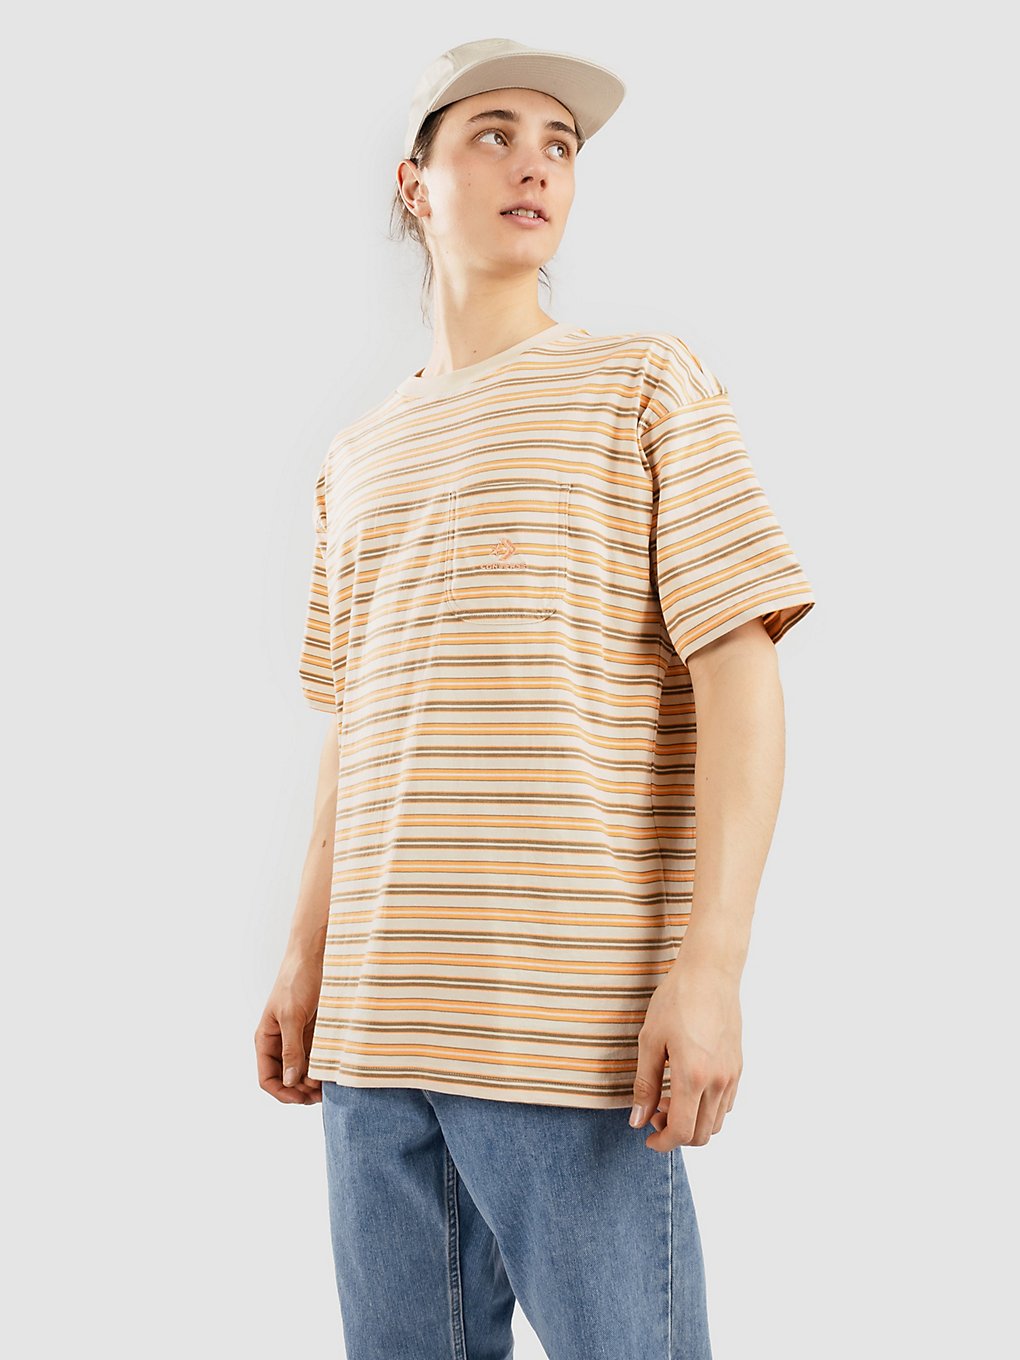 Converse Yarn Dye Striped Pocket T-Shirt natural ivory stripe kaufen